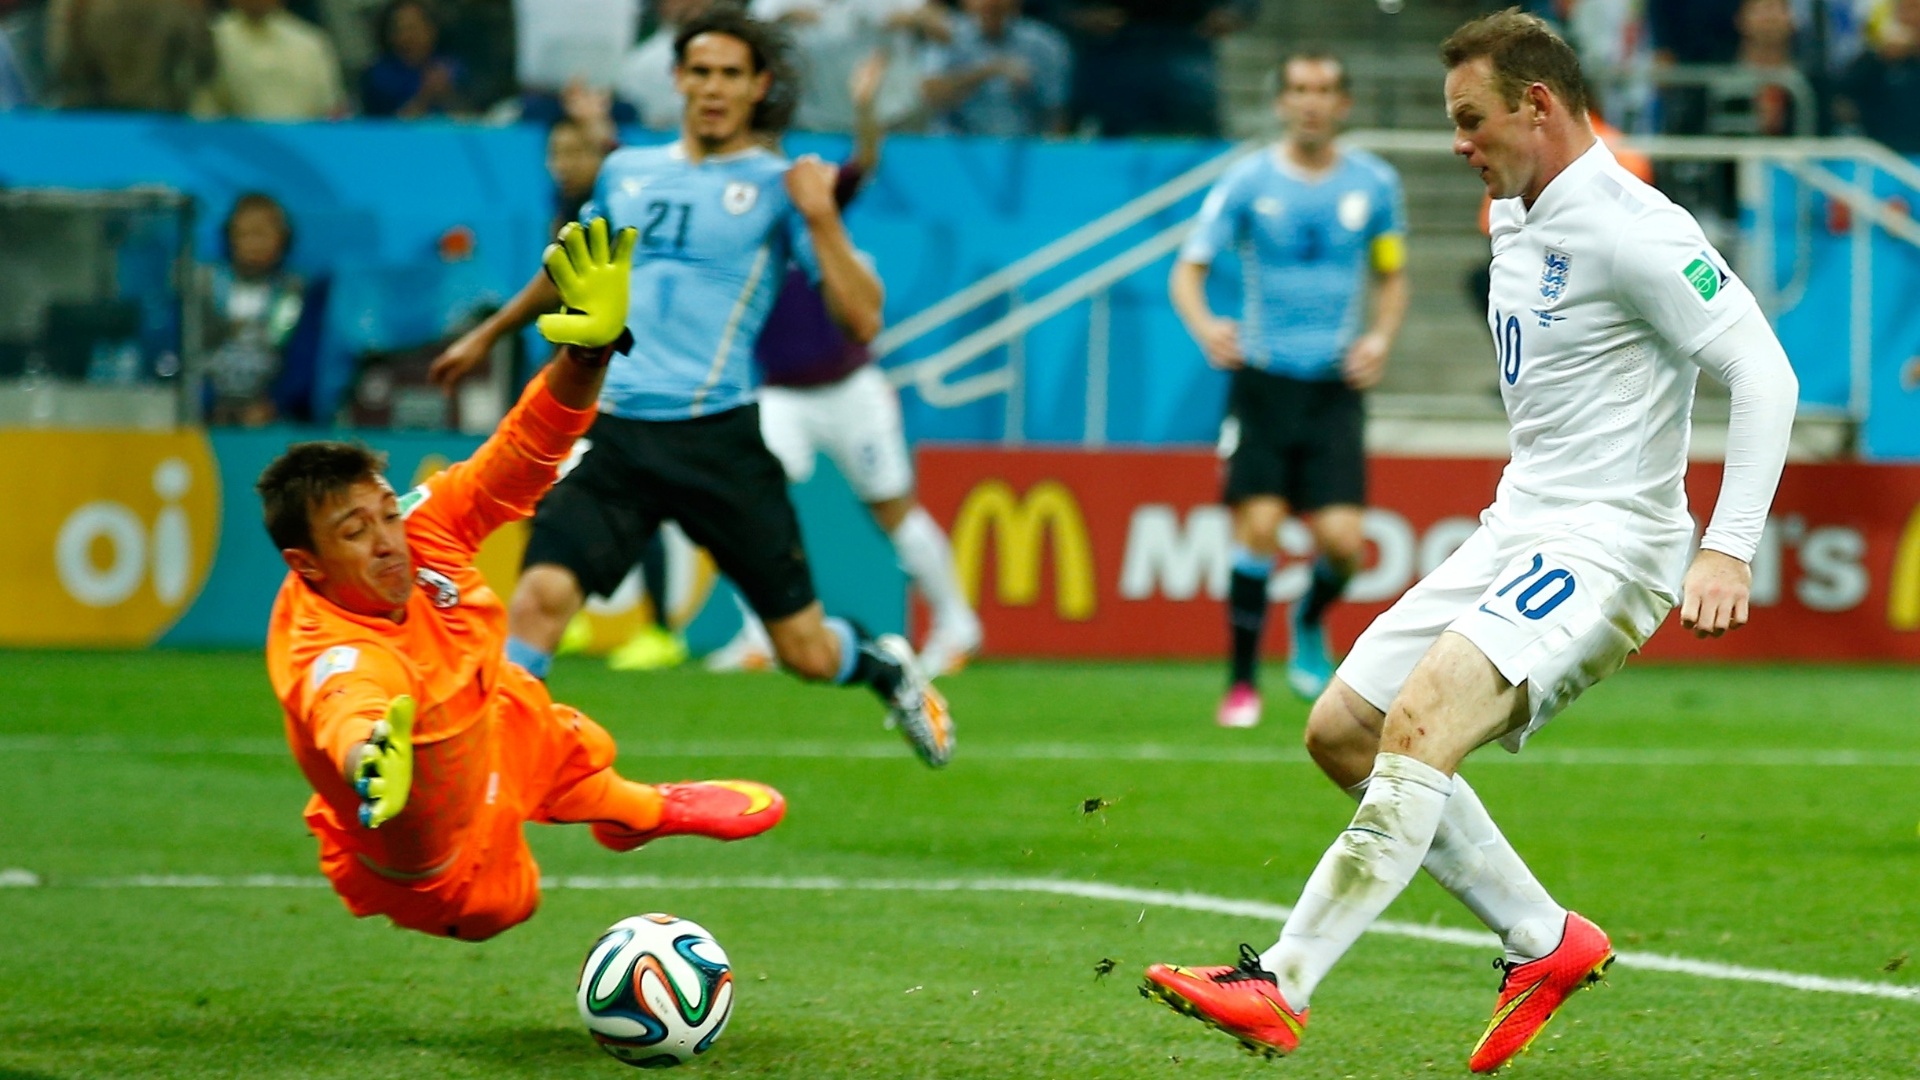 19.jun.2014 - Rooney recebe cruzamento de Johnson e empata para a Inglaterra contra o Uruguai, no Itaquerão